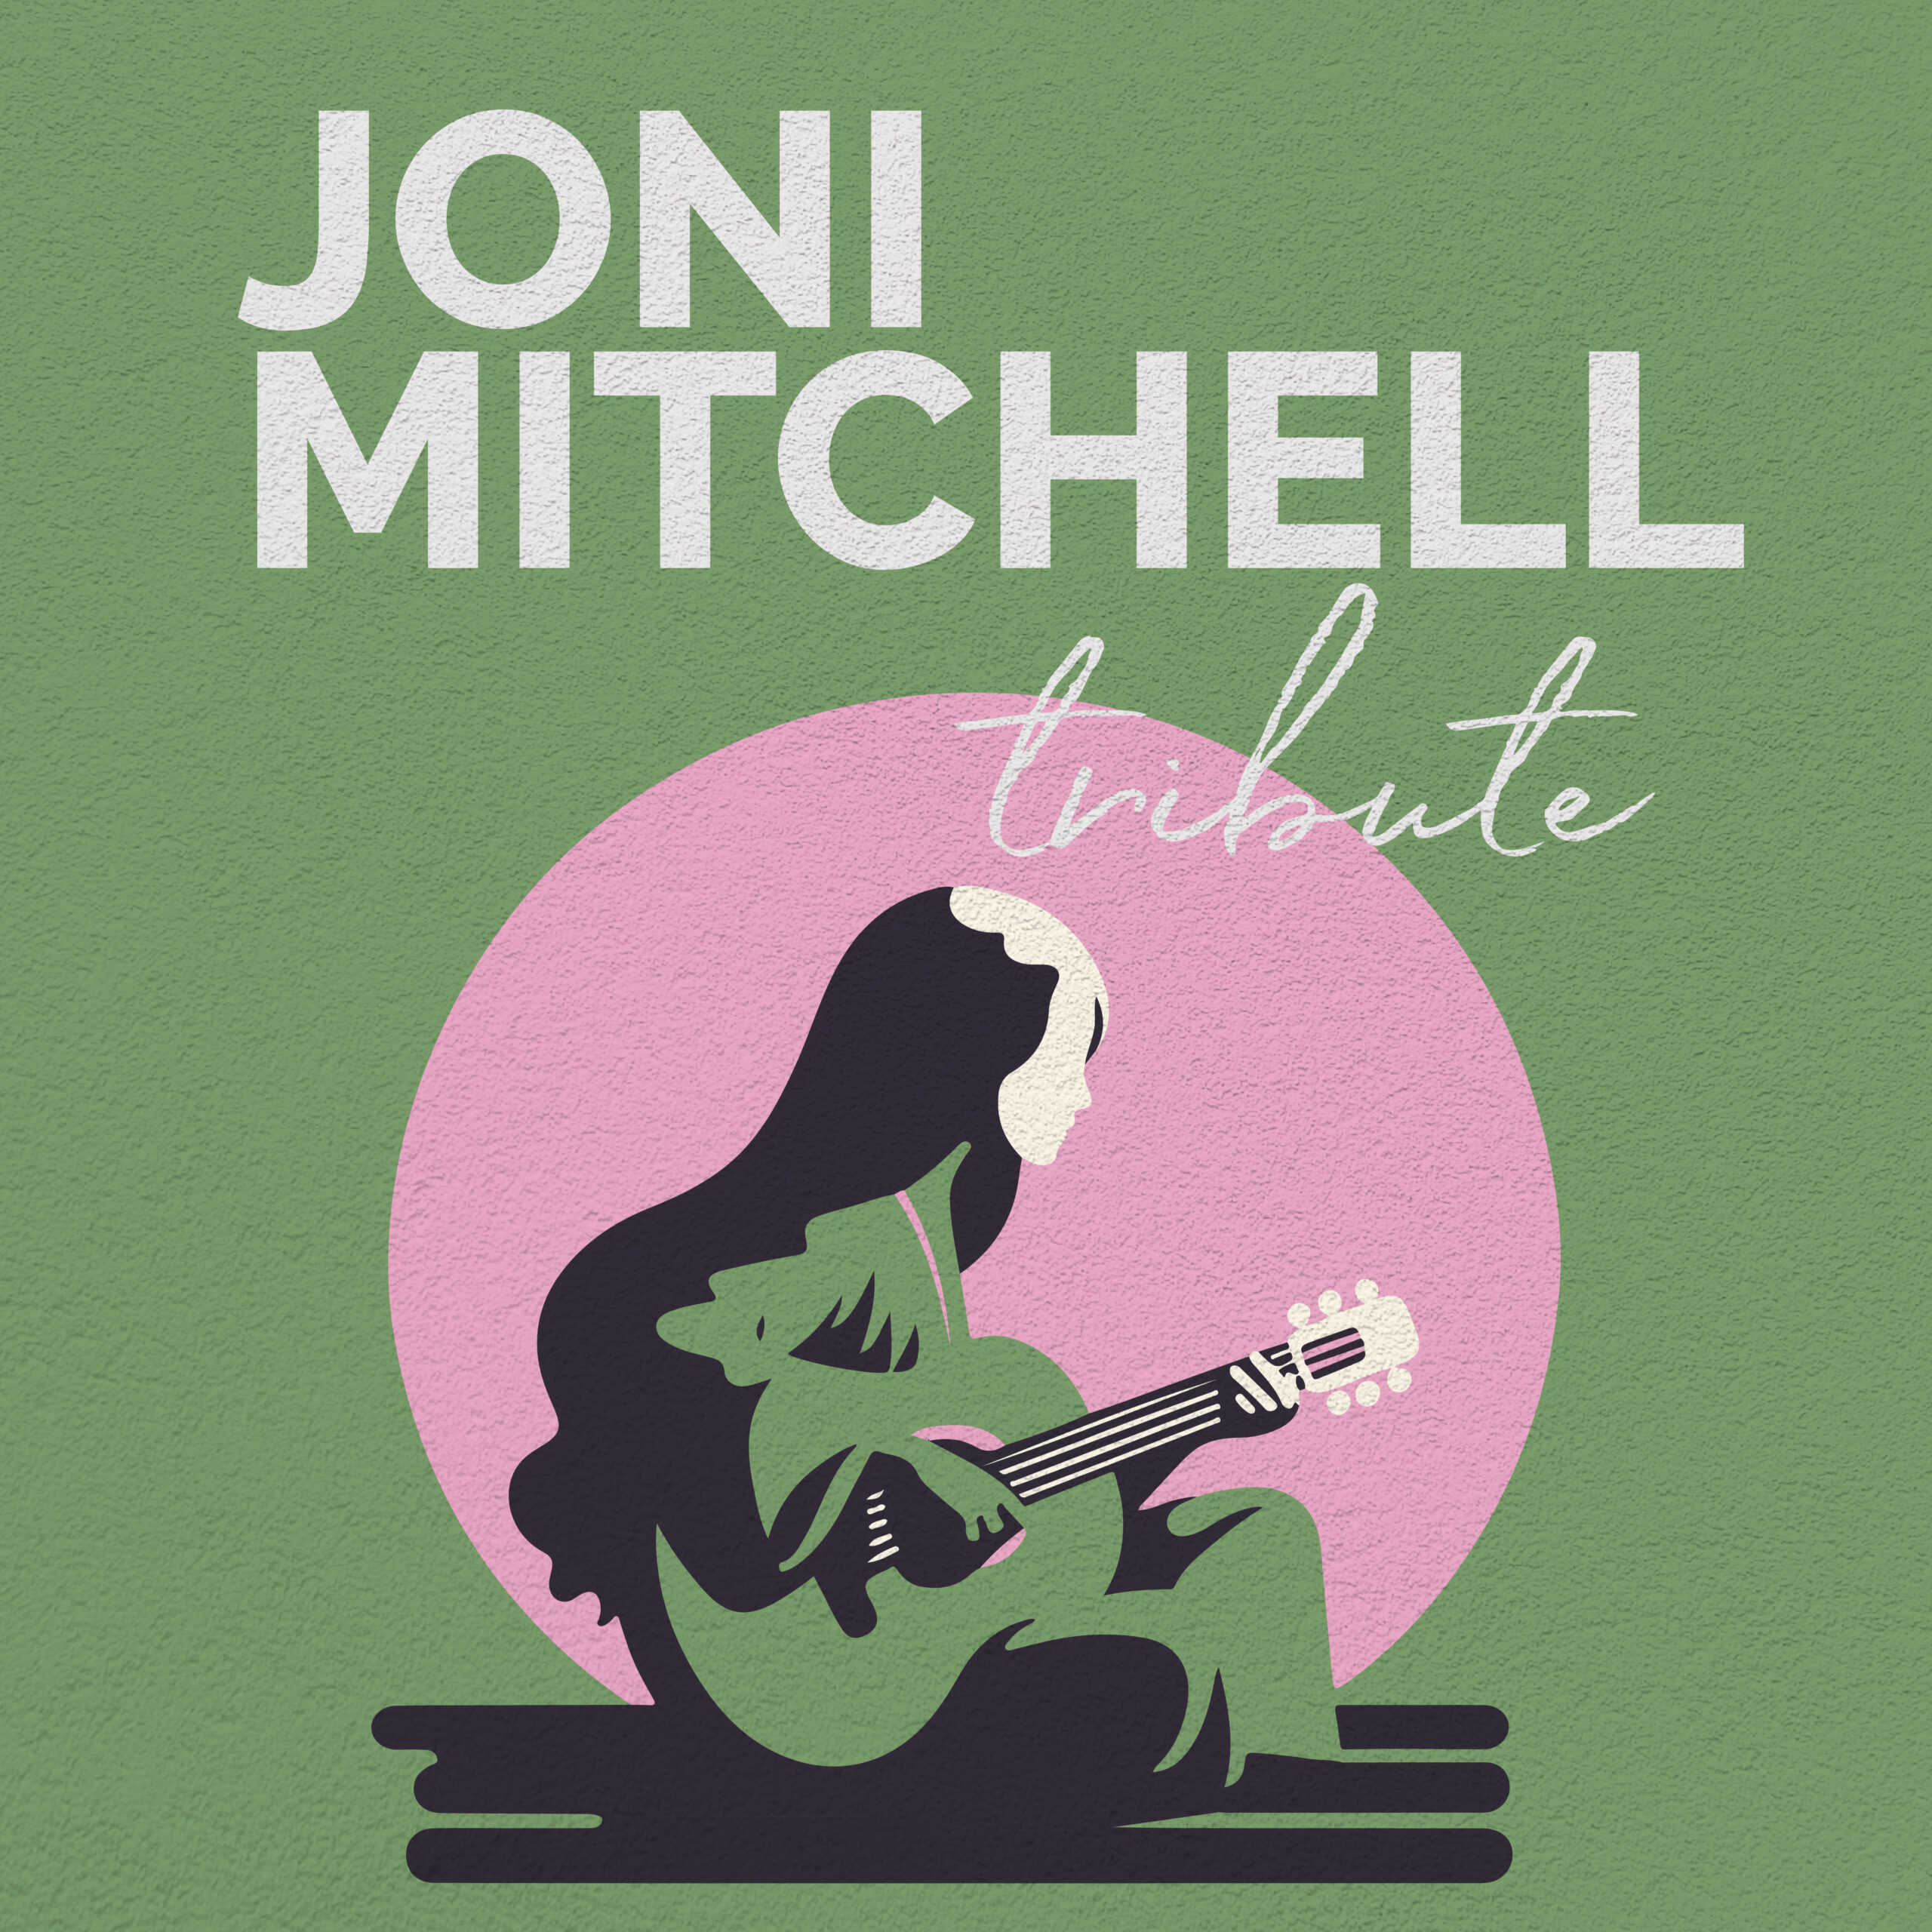 Joni Mitchell Graphic square image